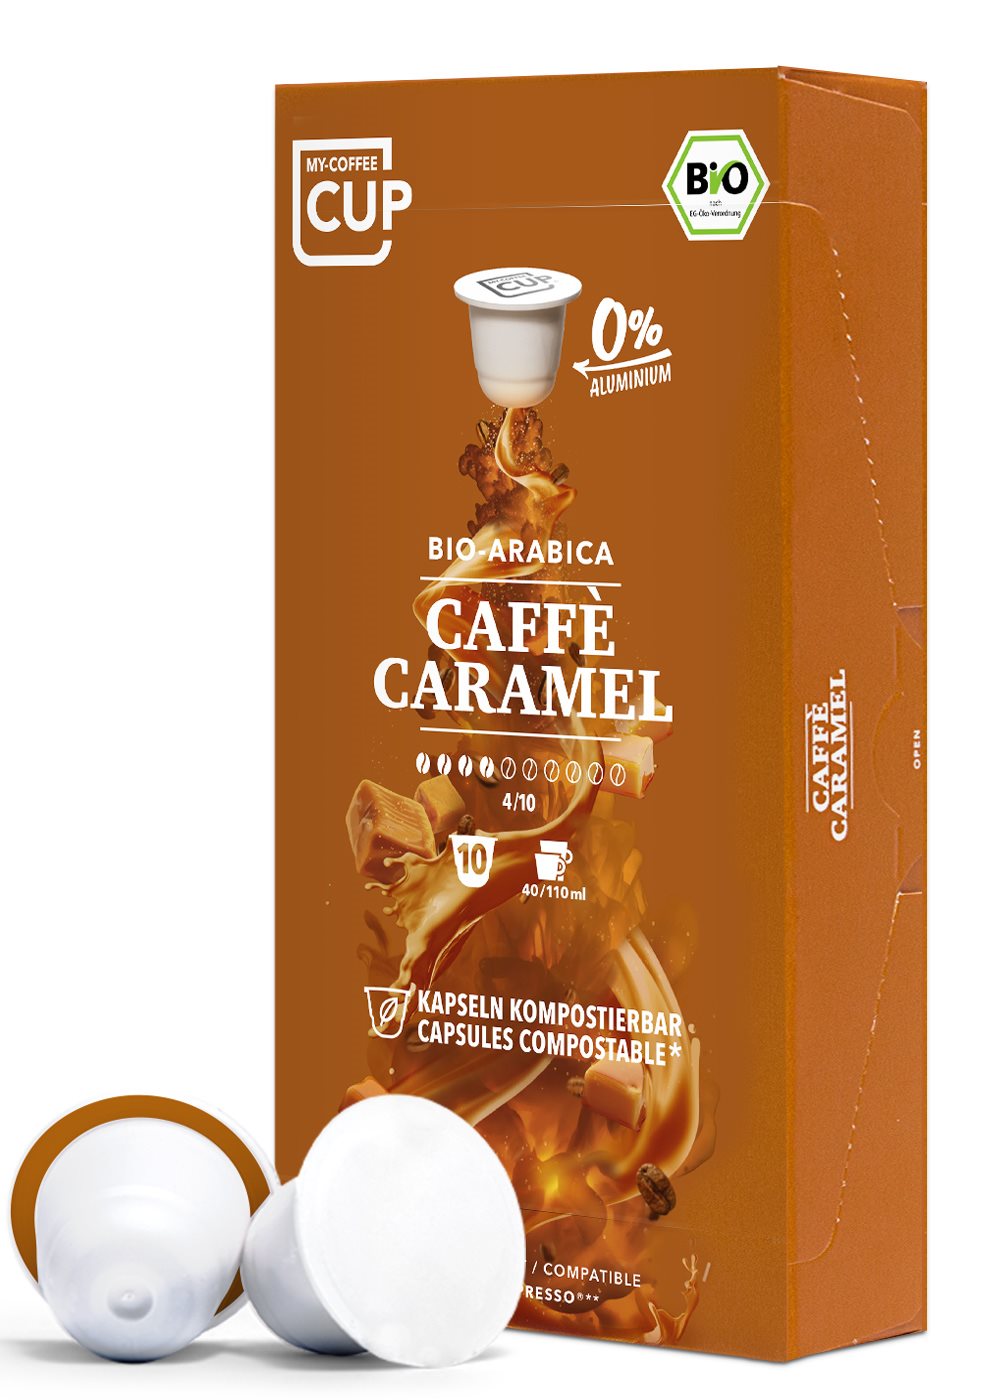 My-CoffeeCup Caffè Caramel